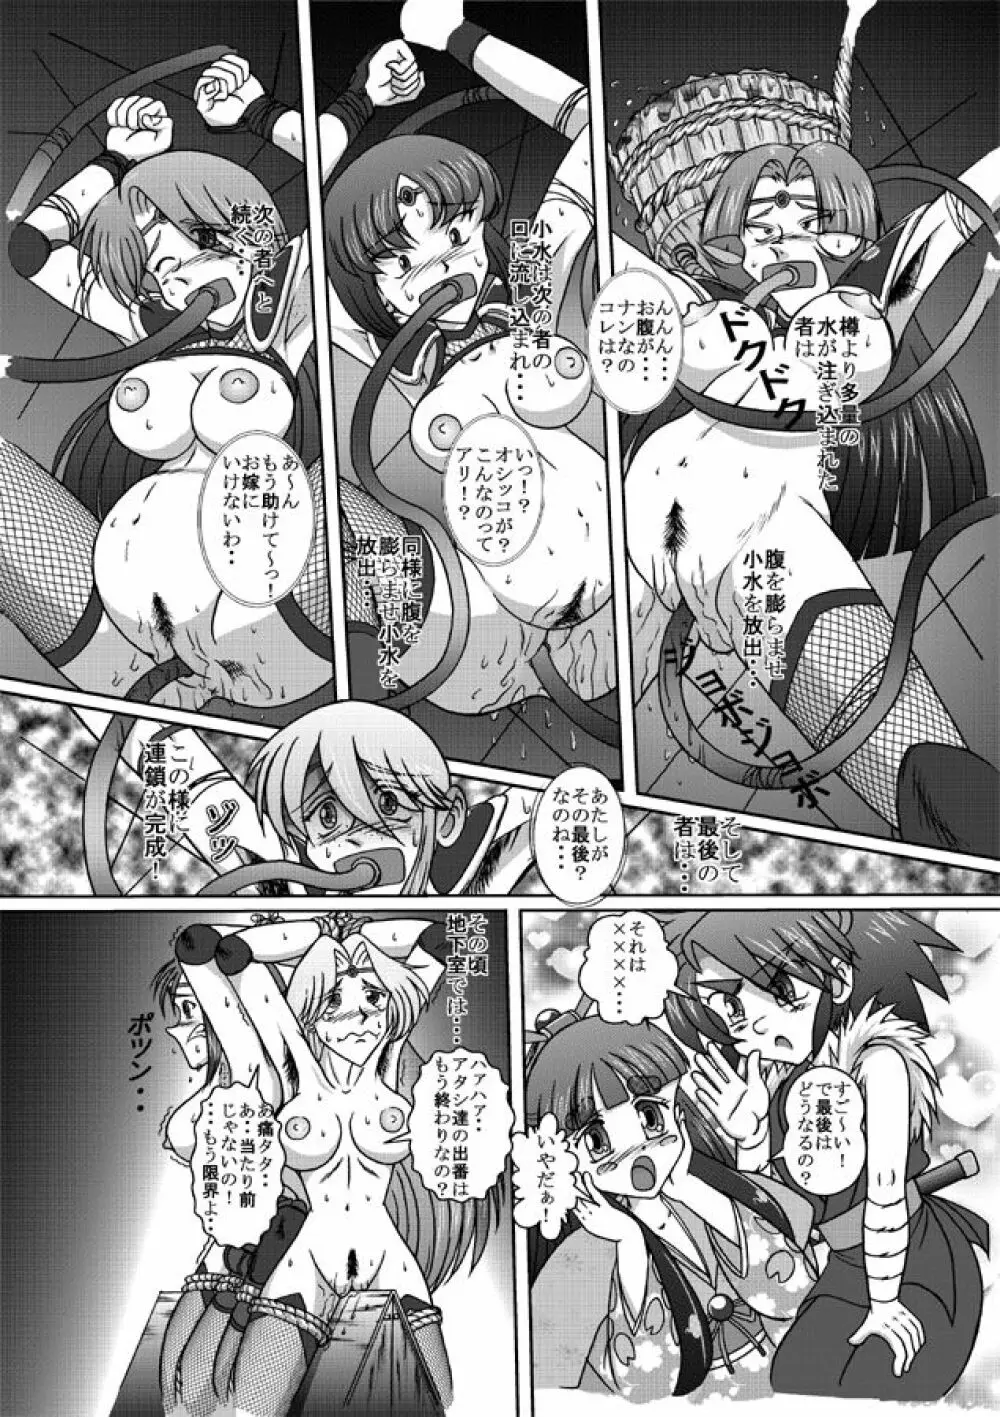 Same-themed manga about kid fighting female ninjas from japanese imageboard. 31ページ